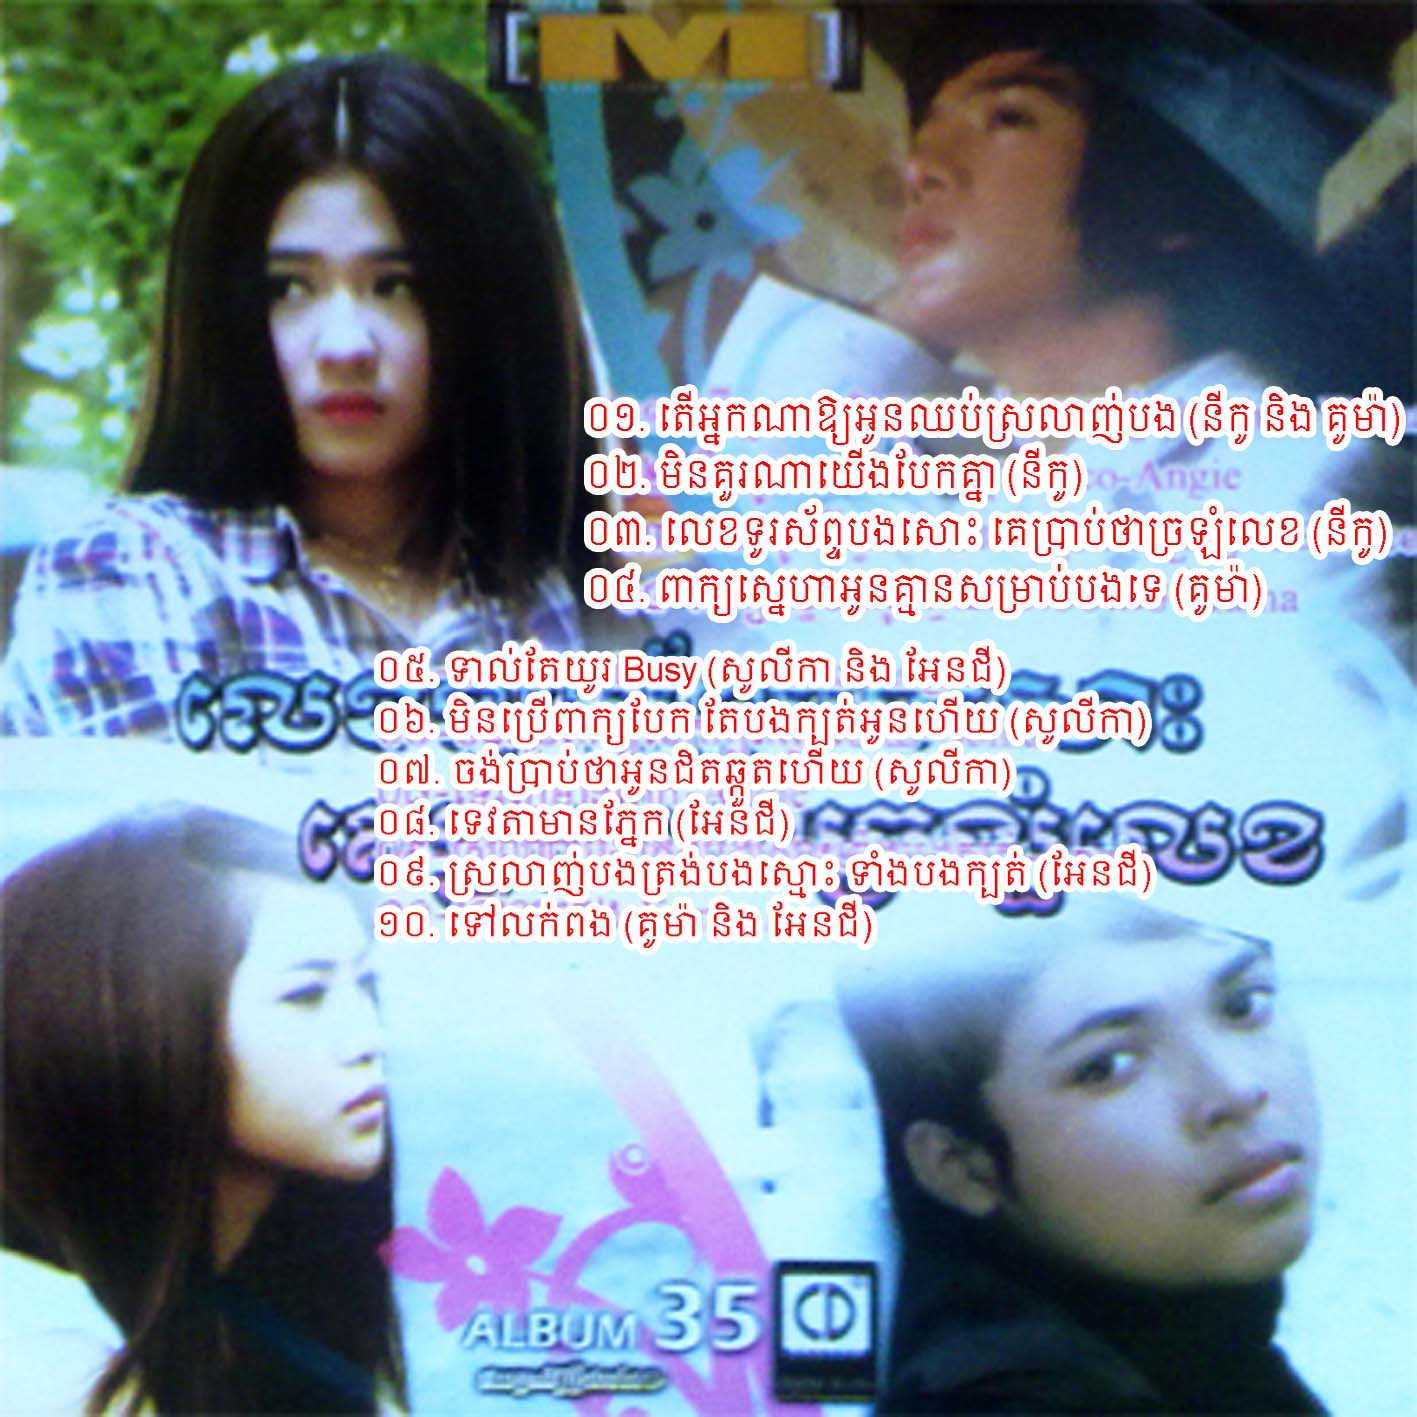 M CD Vol 35